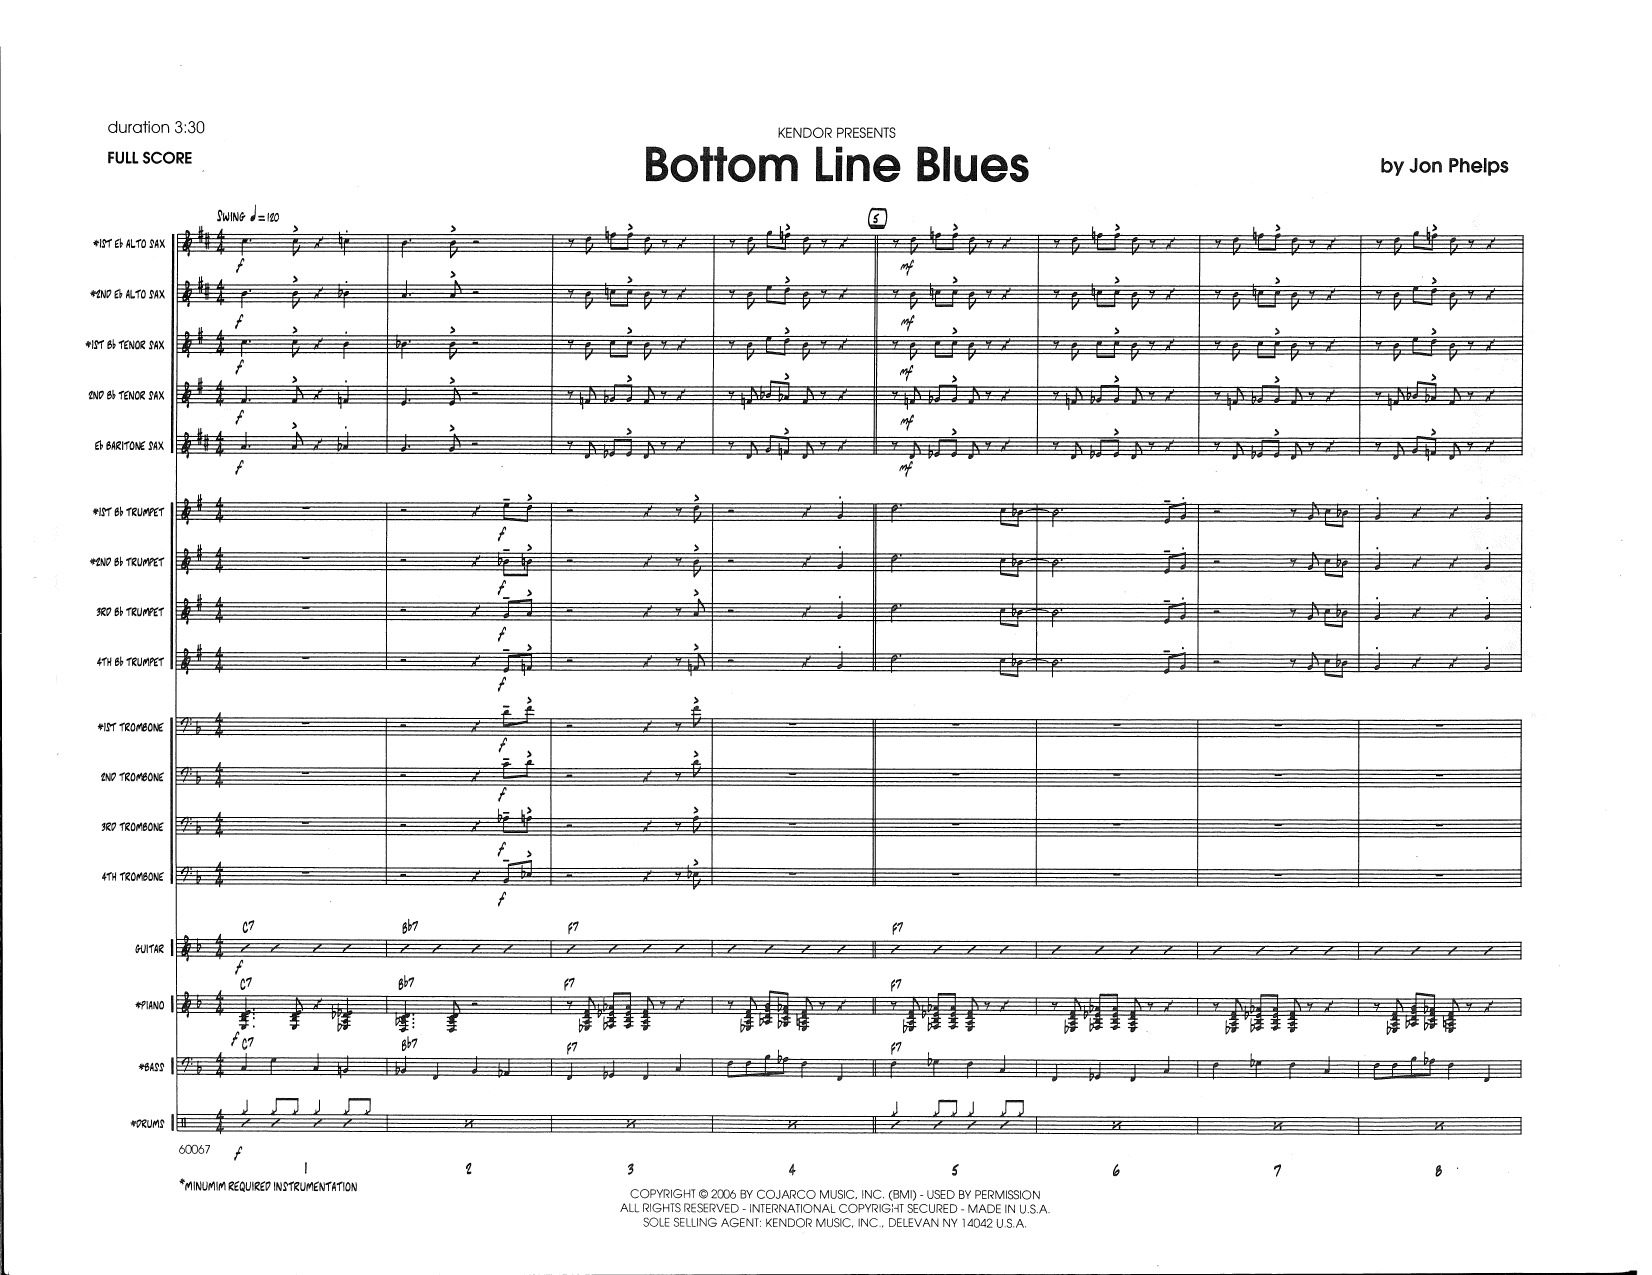 Download Jon Phelps Bottom Line Blues - Full Score Sheet Music